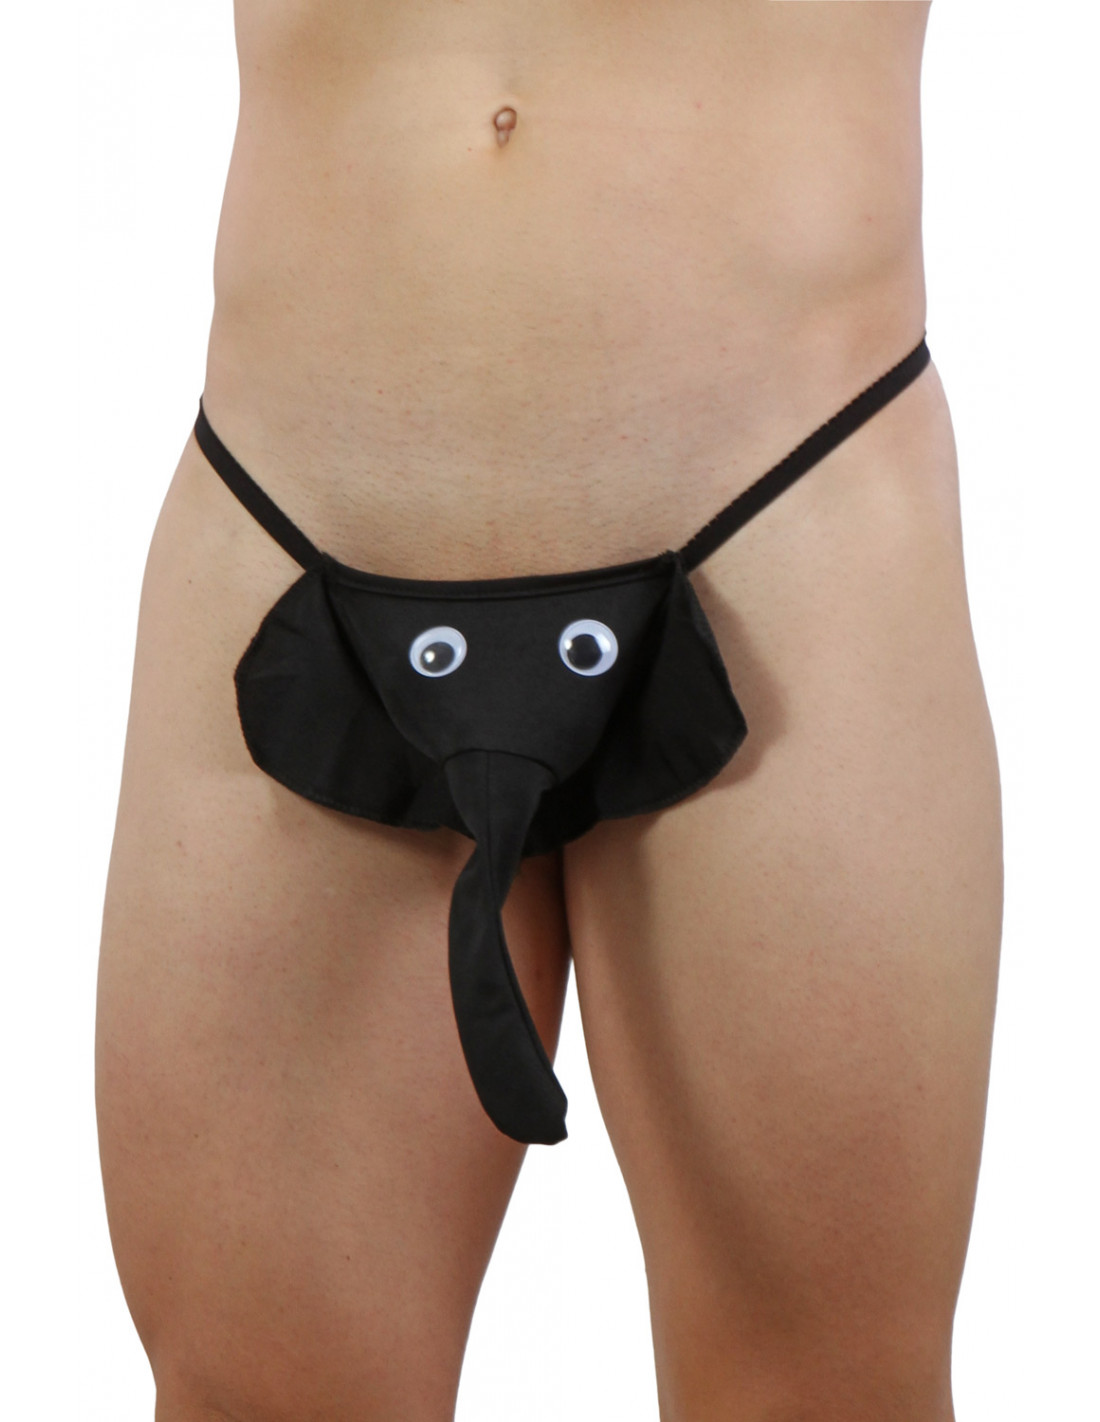 Men's G-string Sexy Elephant Shape Thong Underwear Elephant Trunk